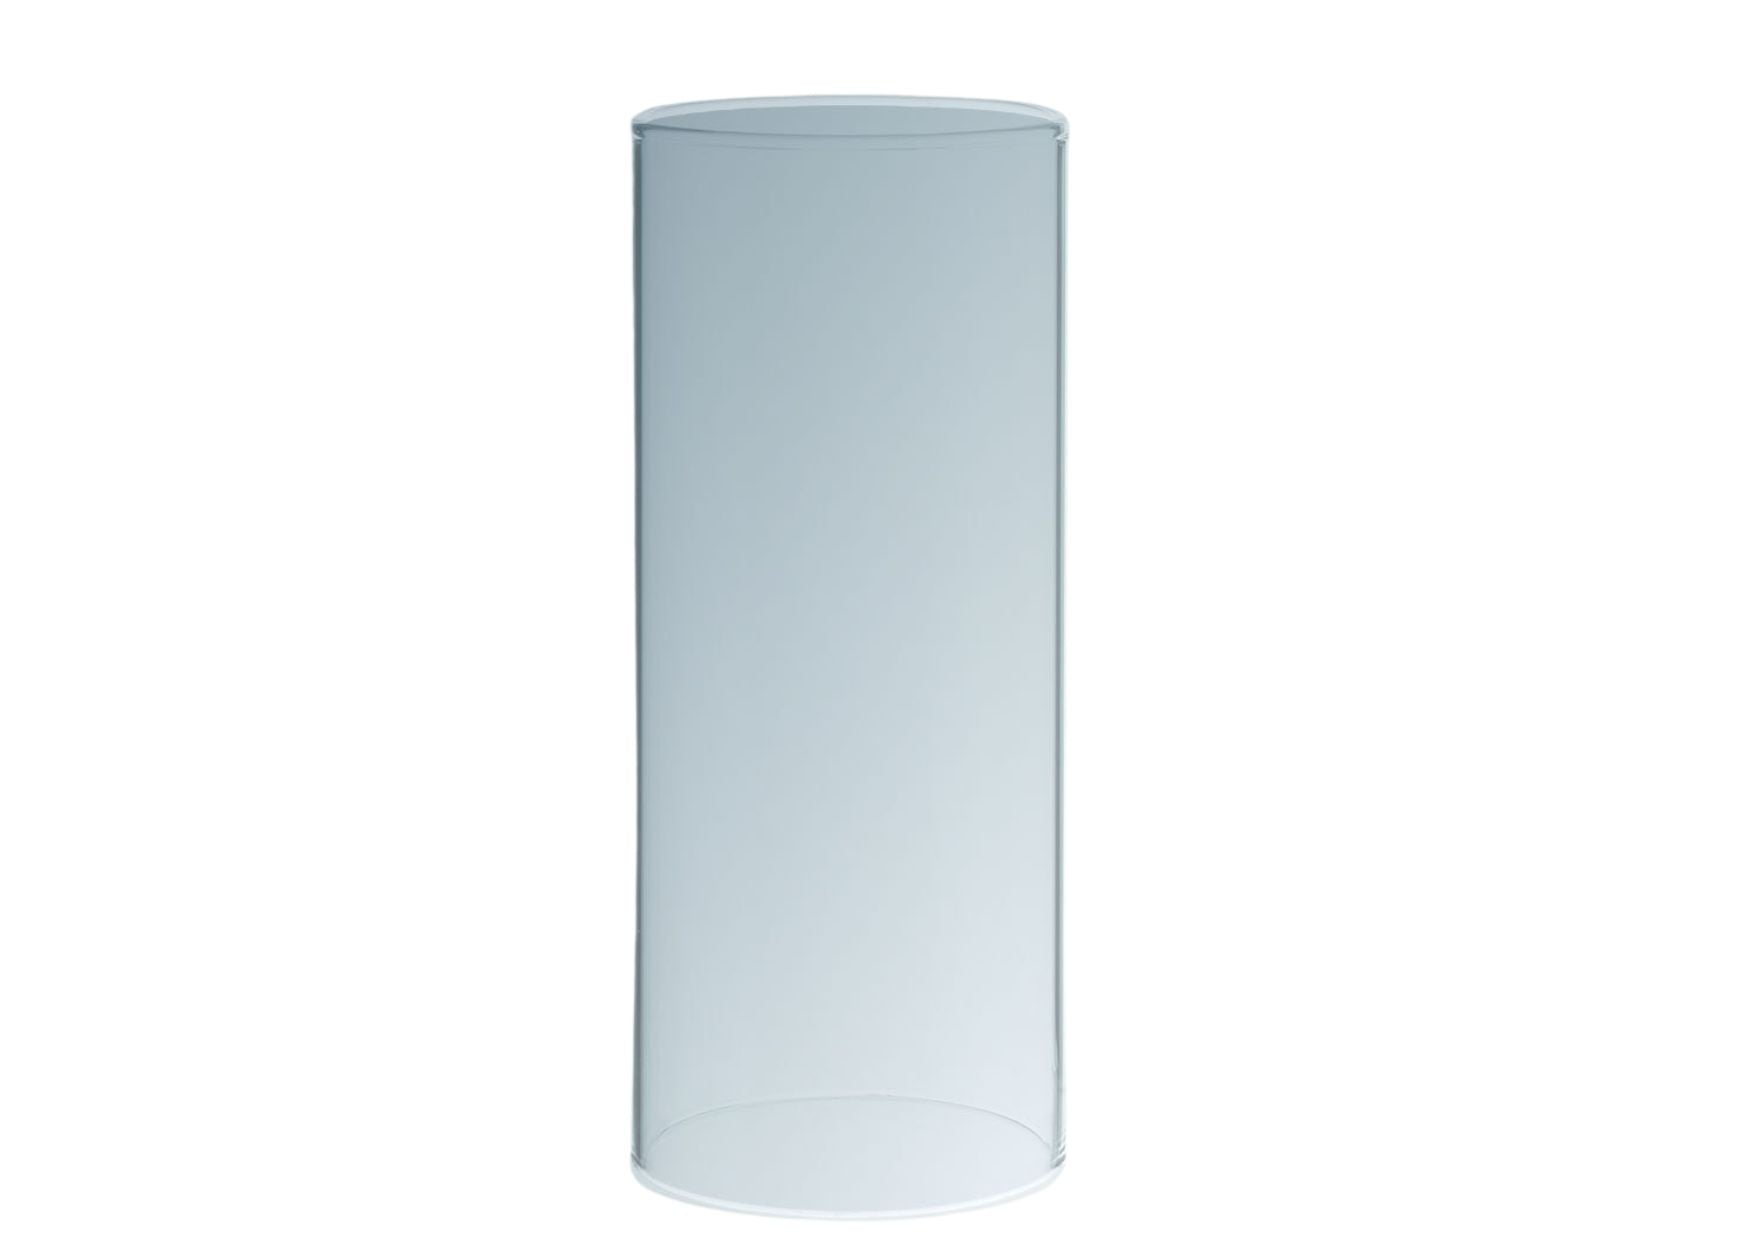 Windscreen glass, cylindrical shape